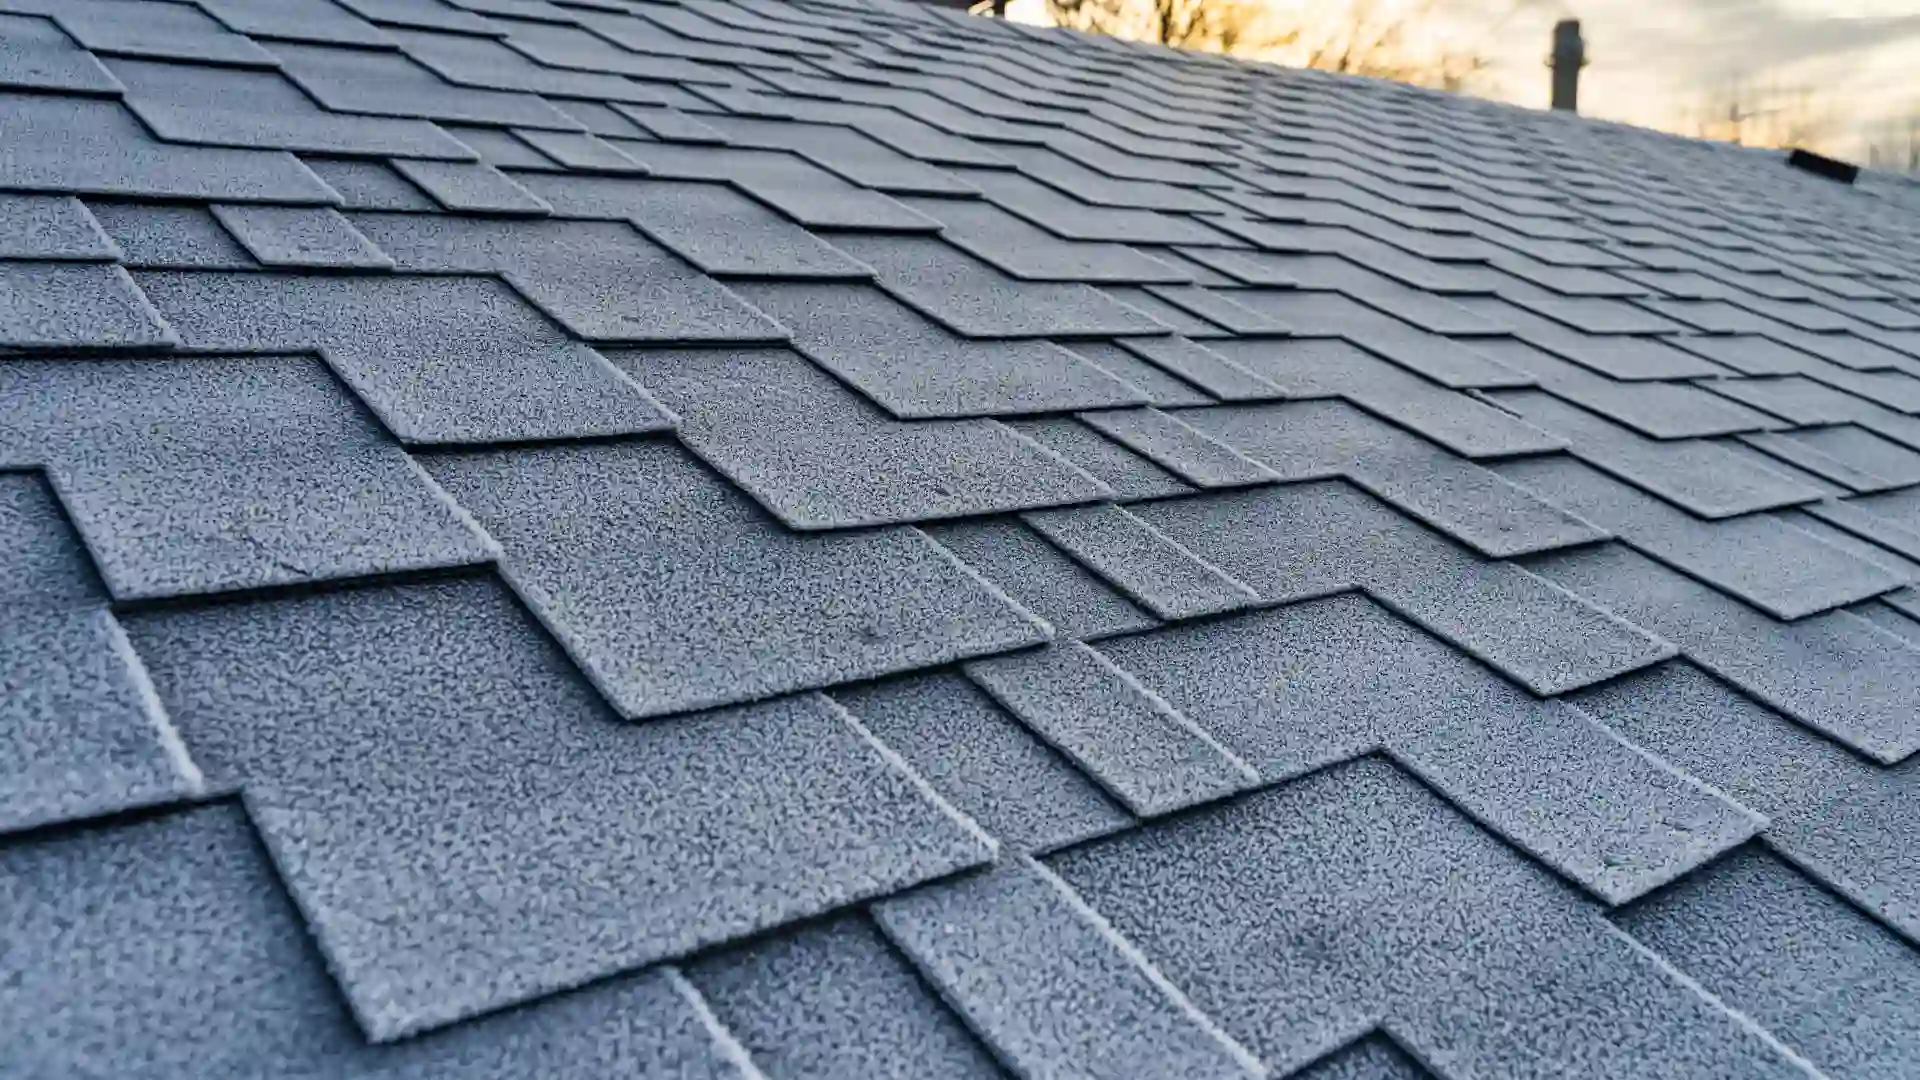 Owens Corning Roof Shingles Benefits